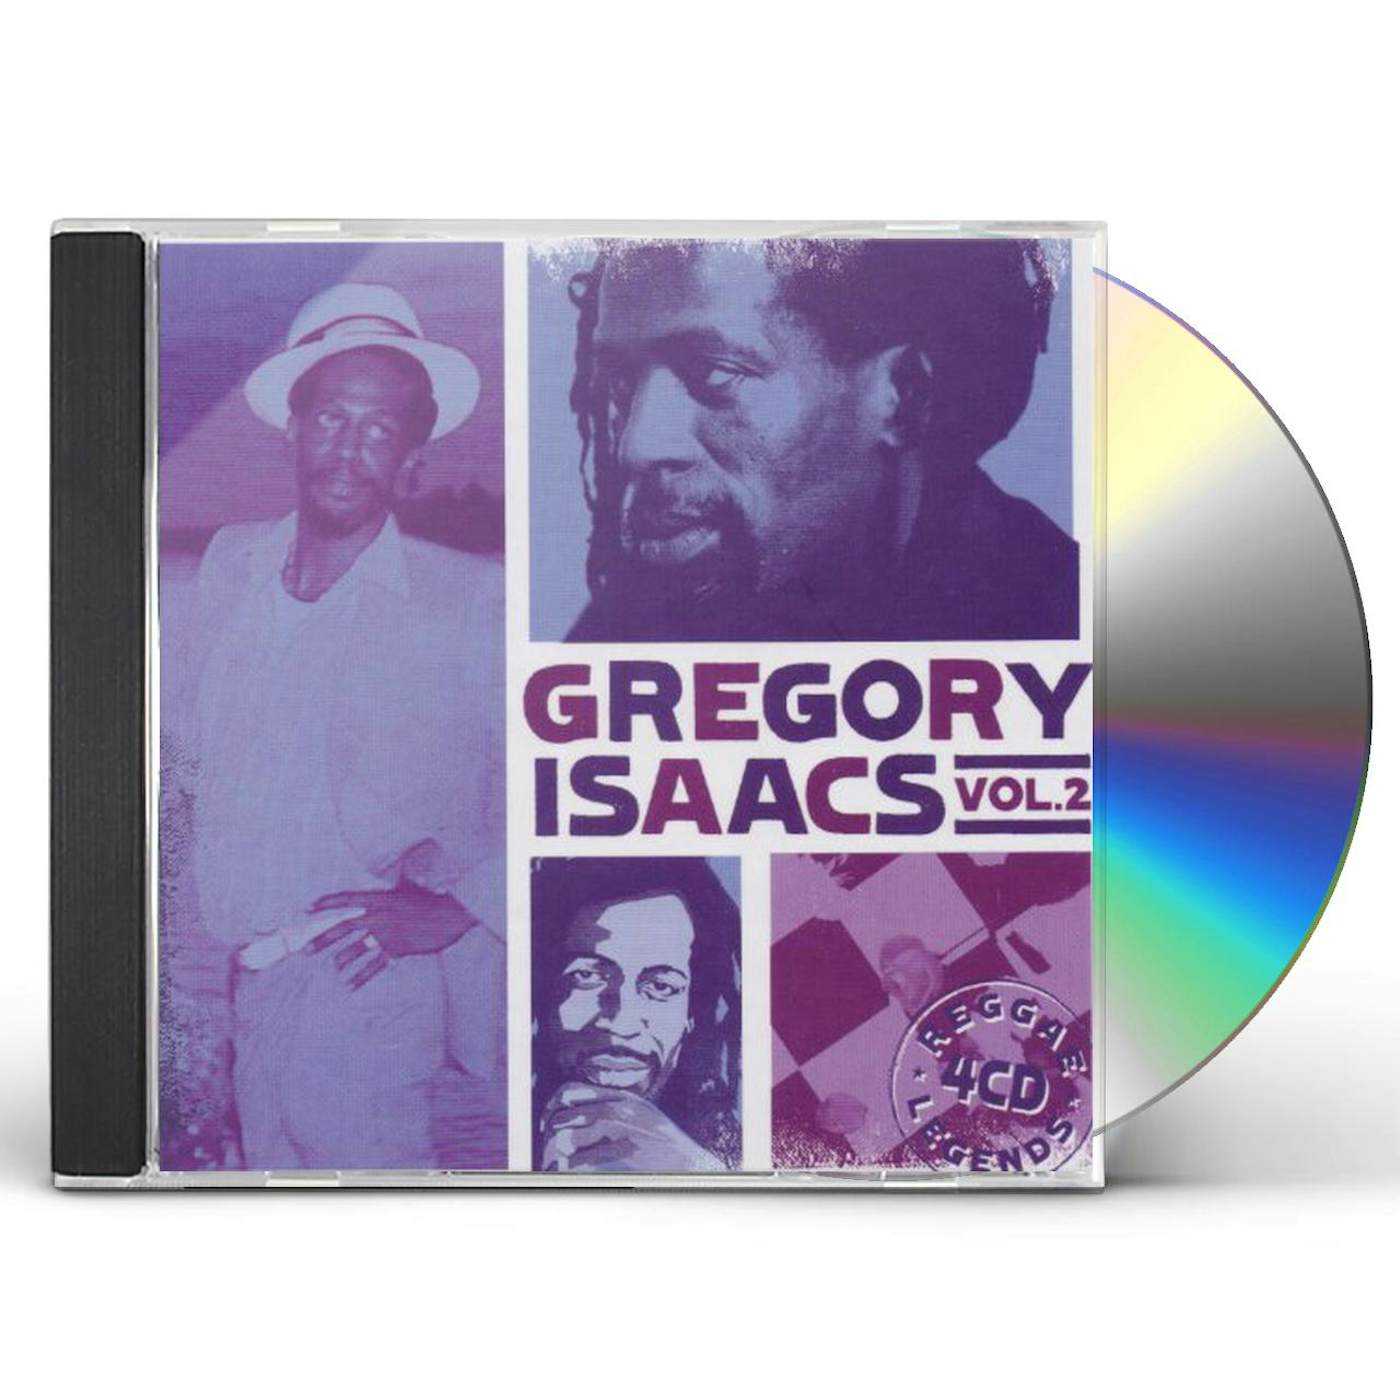 Gregory Isaacs REGGAE LEGENDS 2 CD